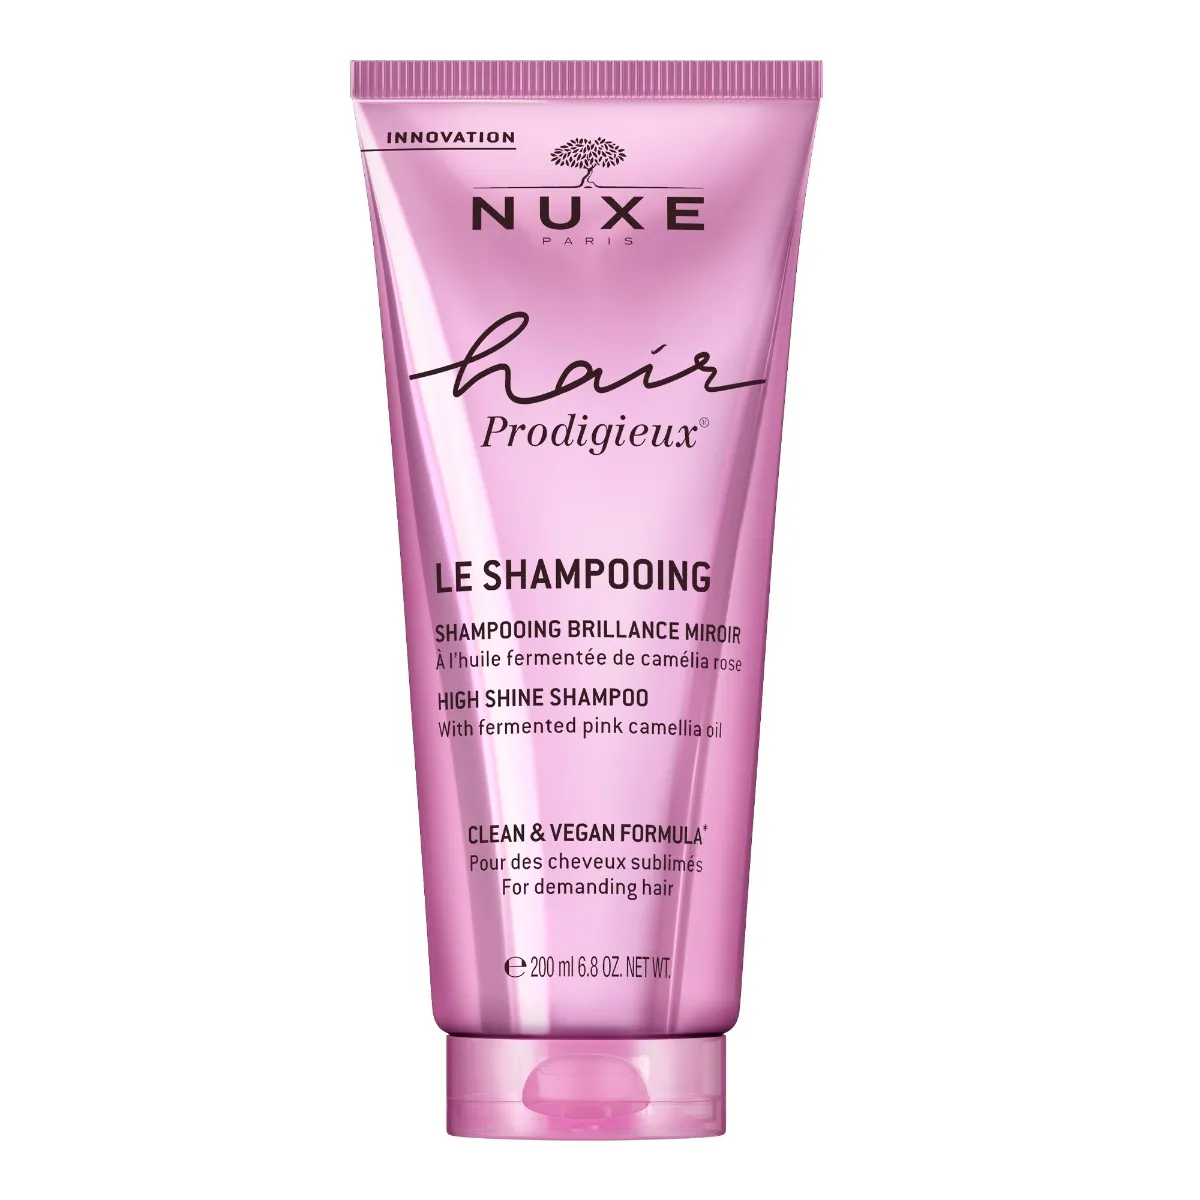 nuxe-hair-prodigieux-shampooing-brillance-miroir-200ml-3264680034695